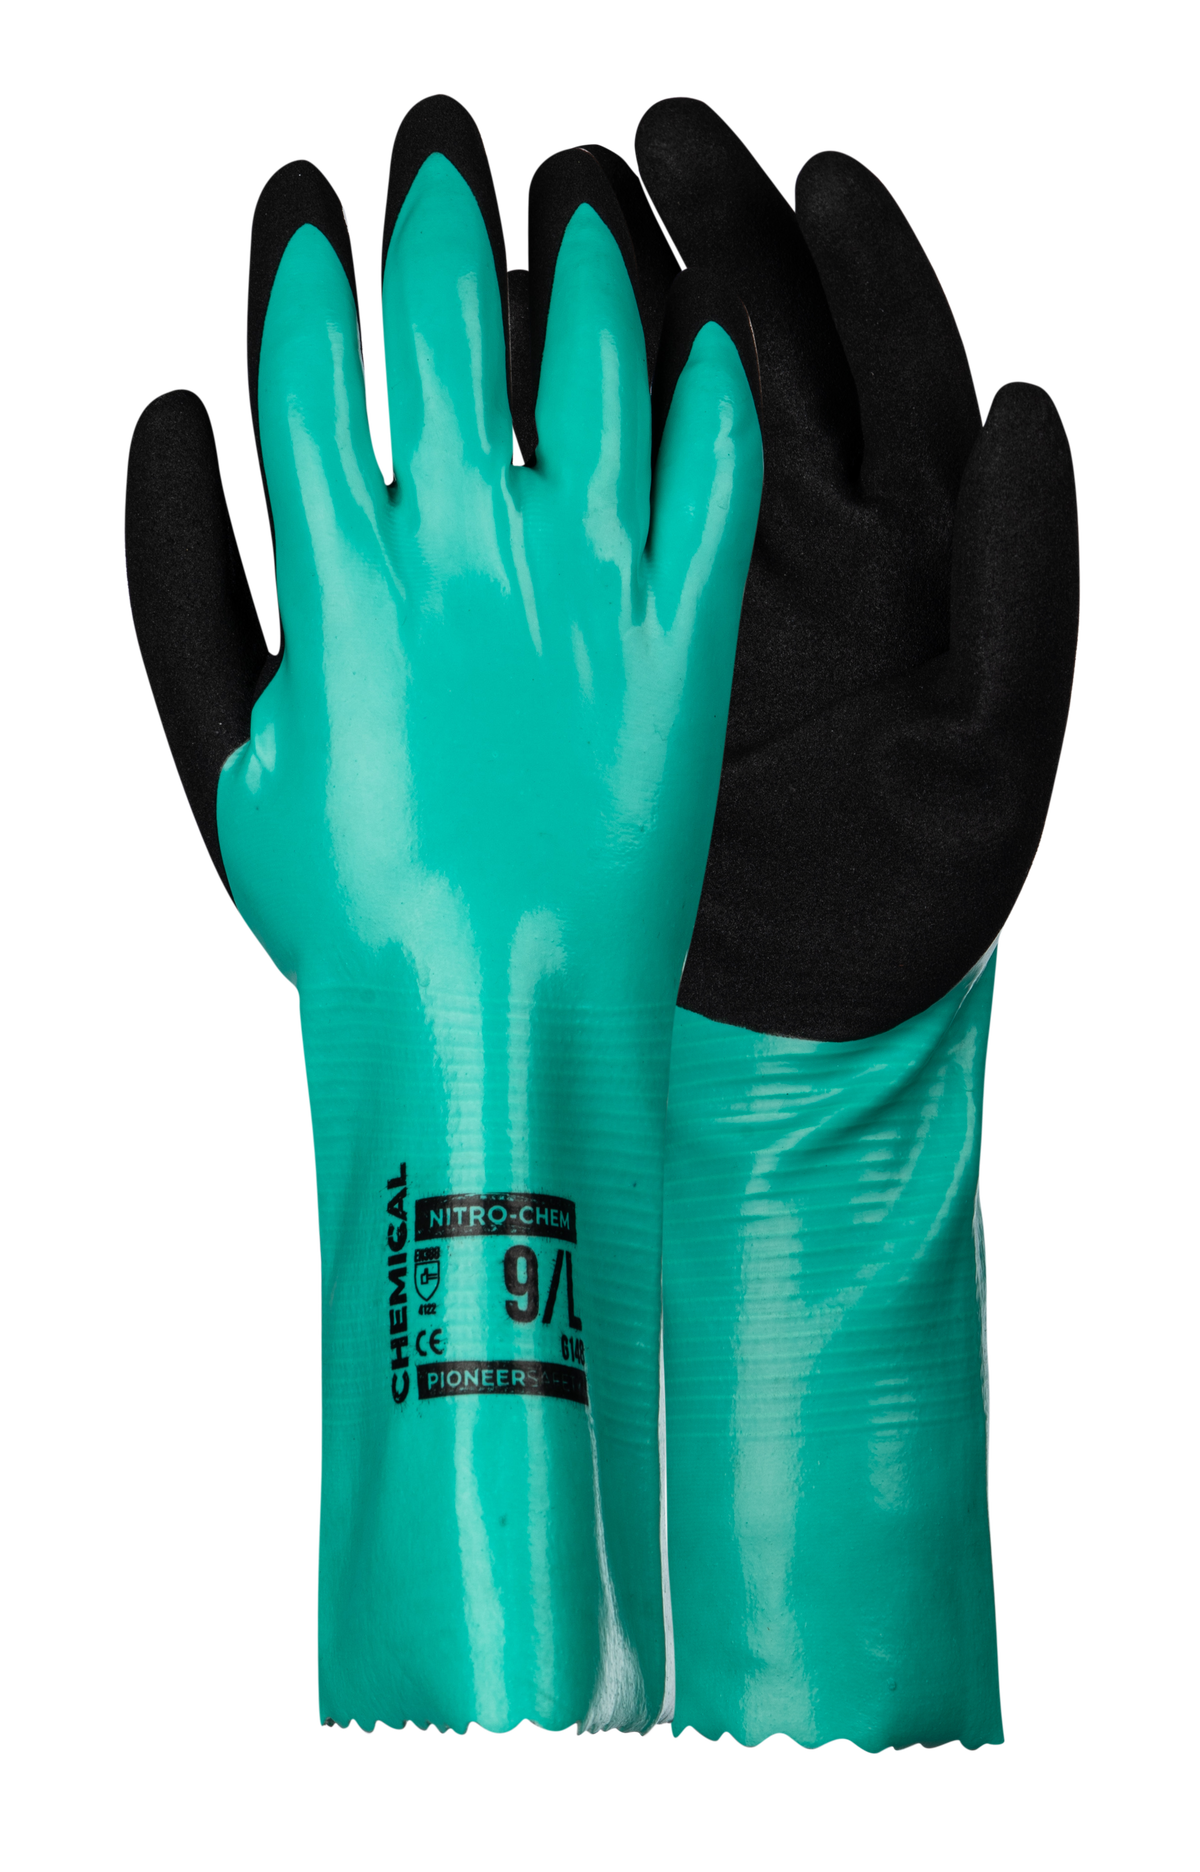 PIONEER Nitro-Chem Glove